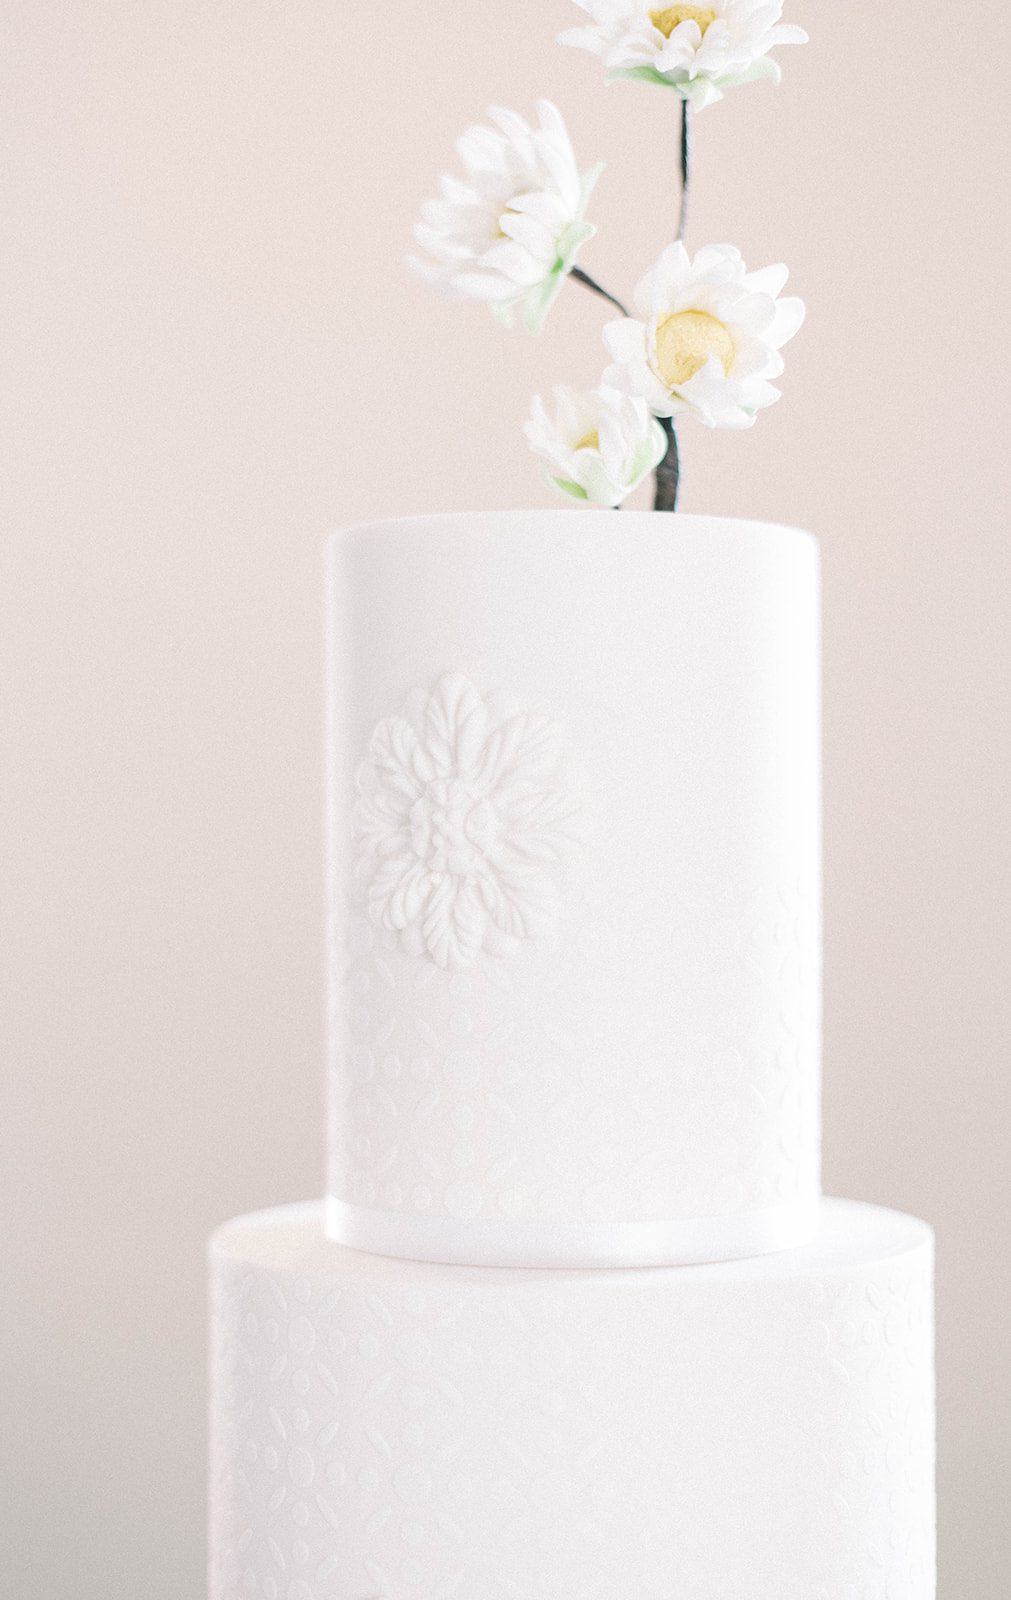 beautiful white wedding cake with daisy details